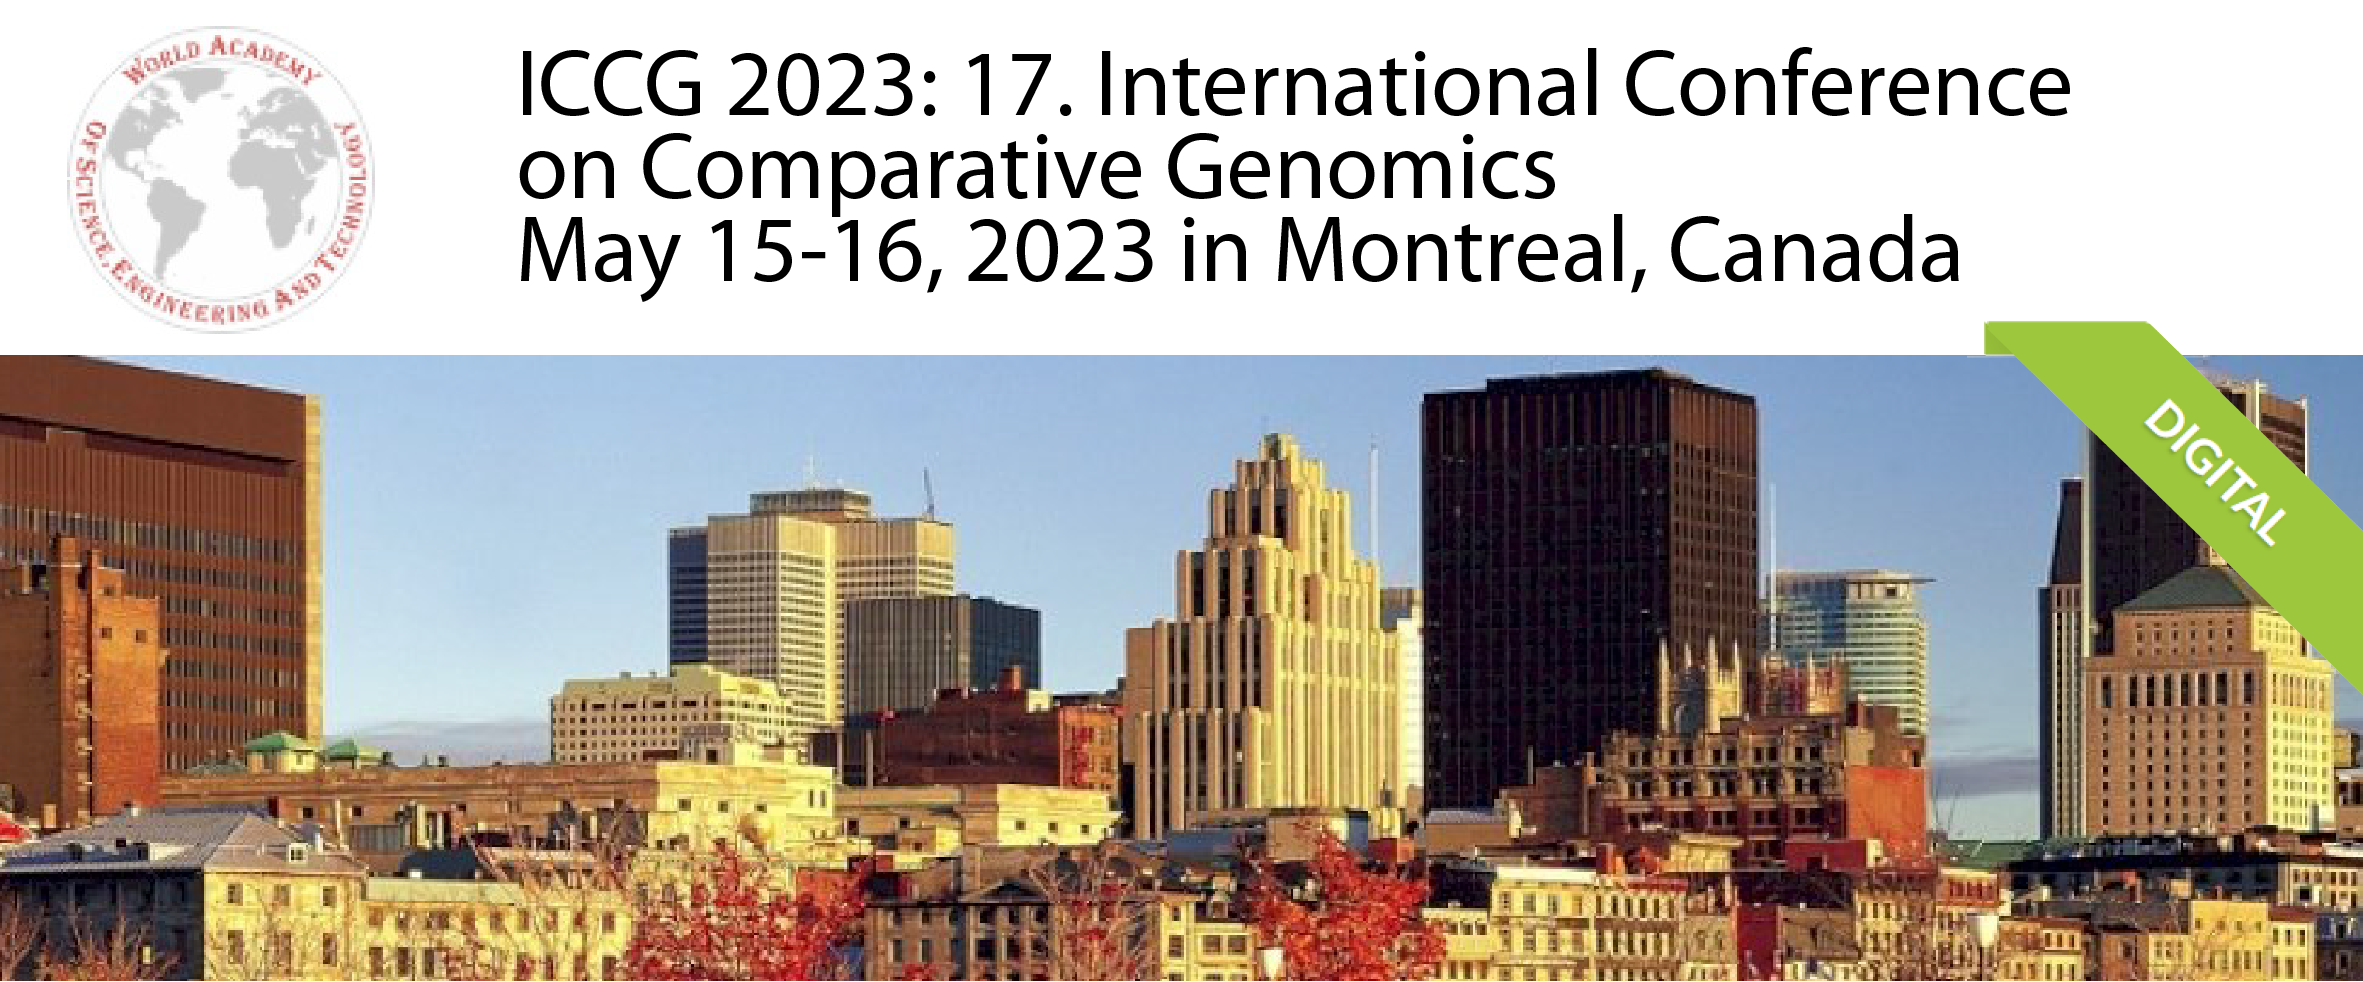 International Conference on Comparative Genomics - ICCG 2023